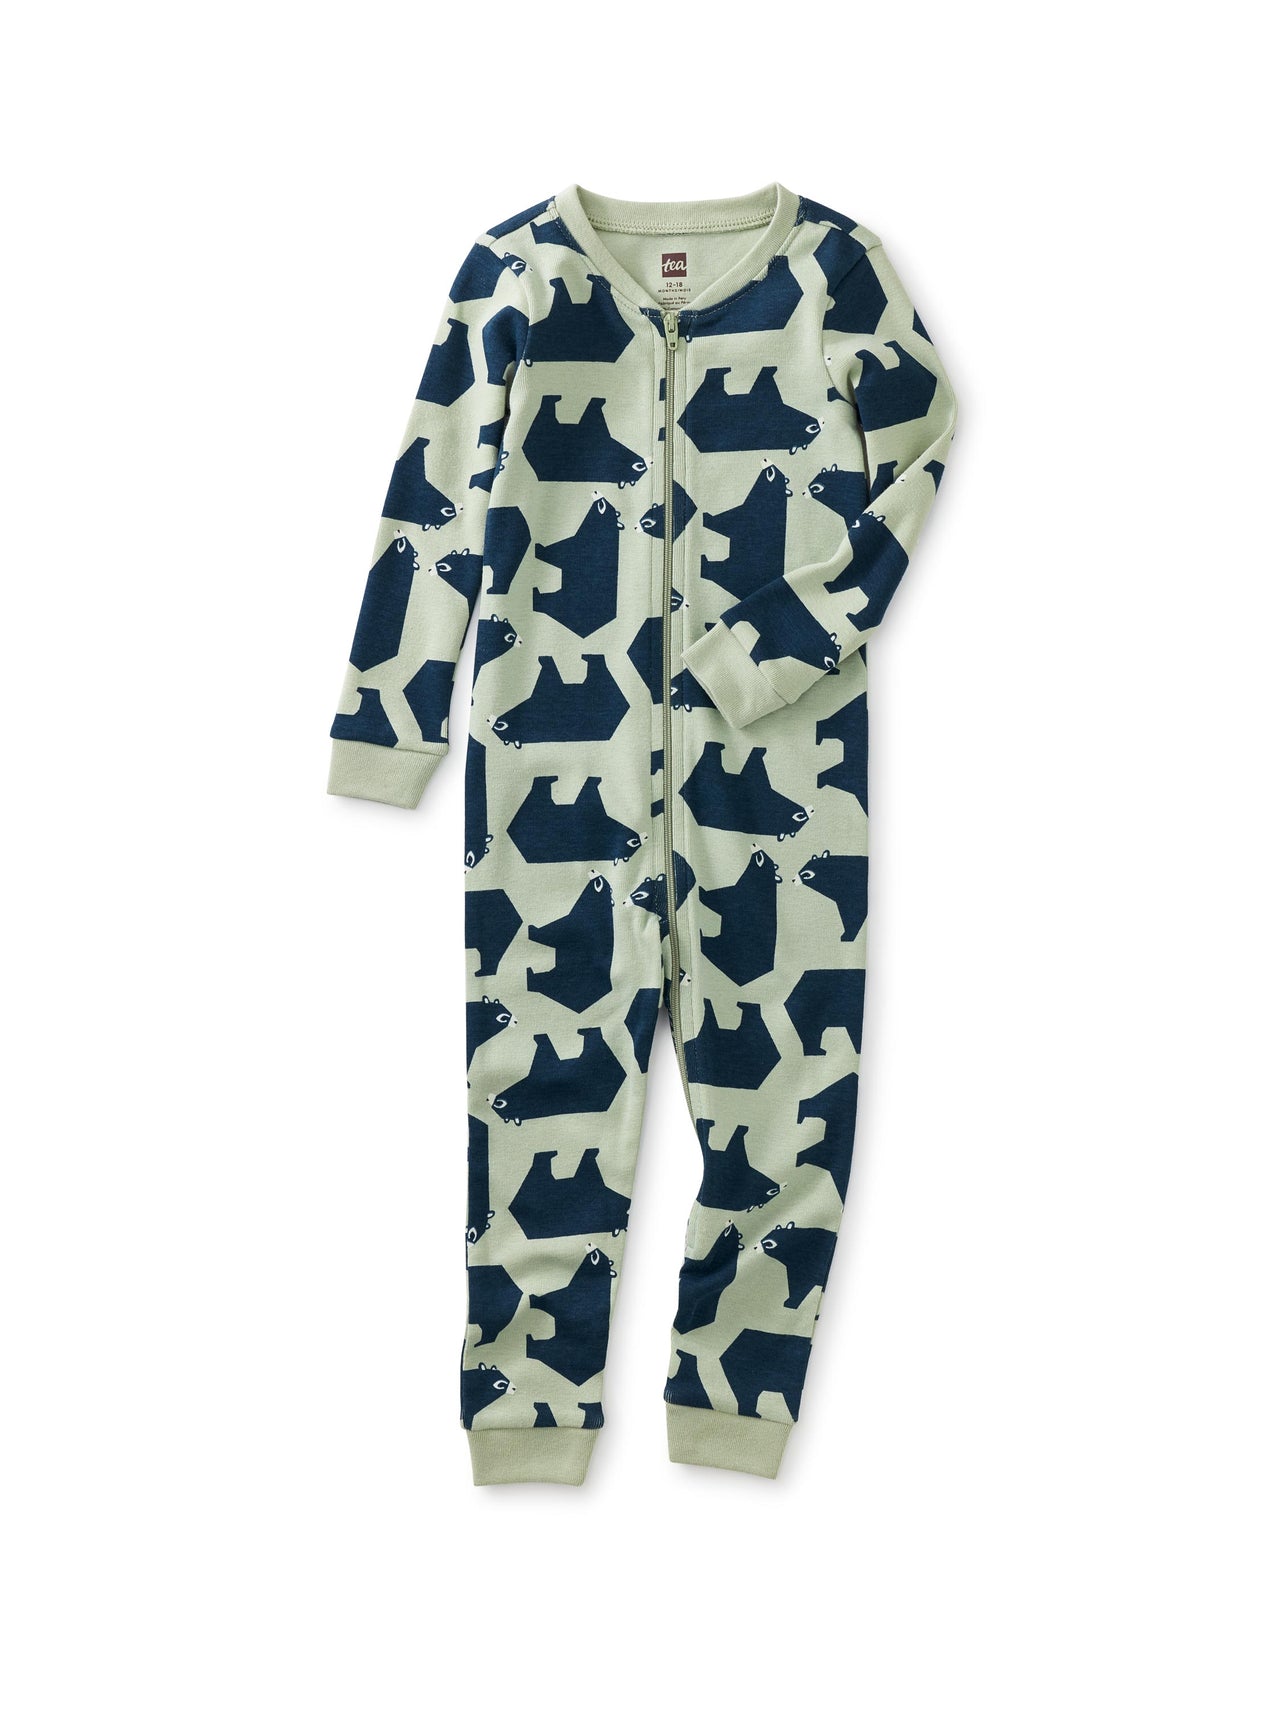 Sleep Tight Baby Pajamas- Brown Bear Bunch